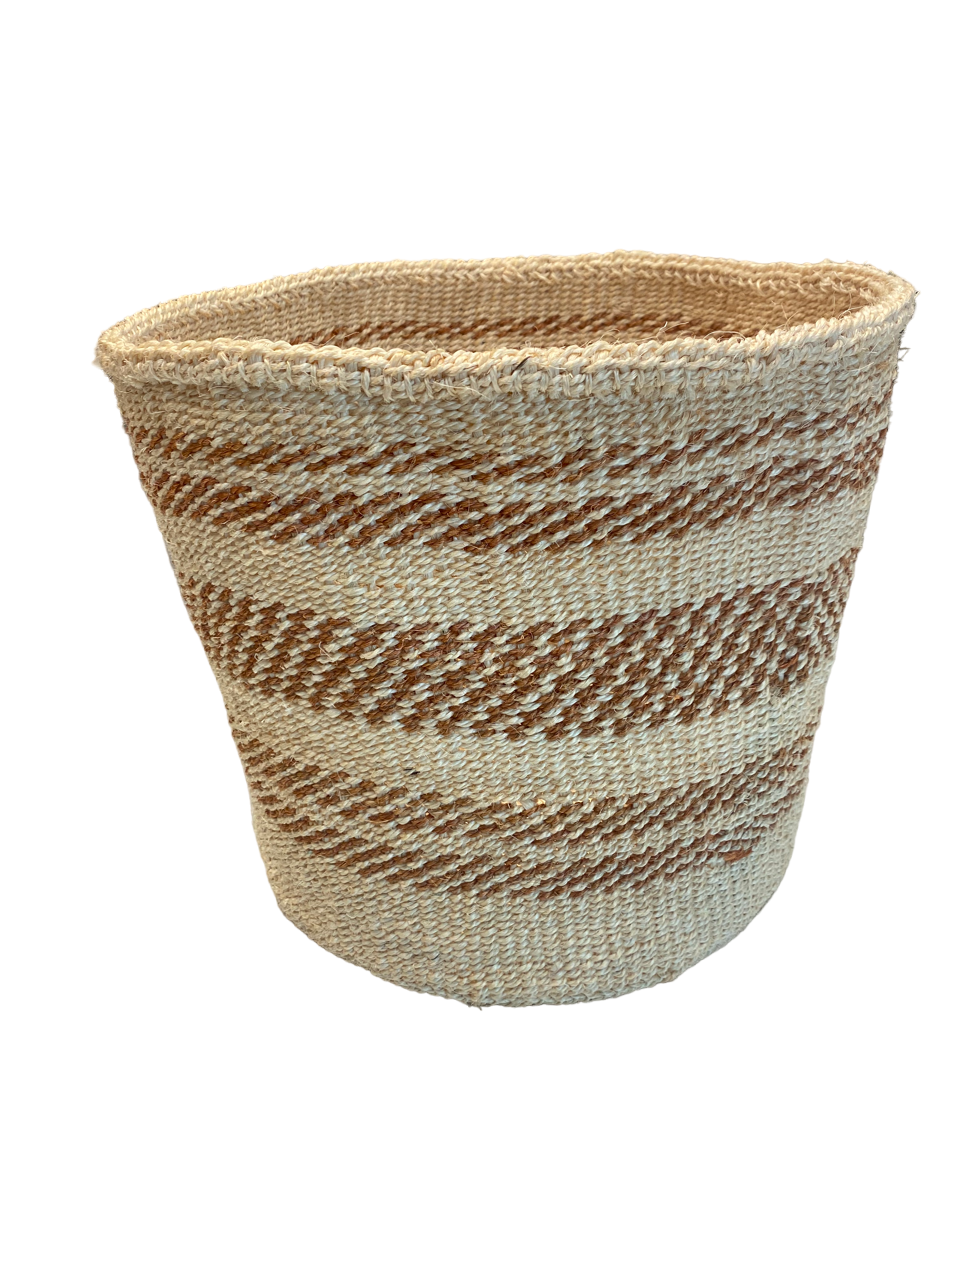 Artisanal Handwoven Sisal Basket Practical Weave L - 39